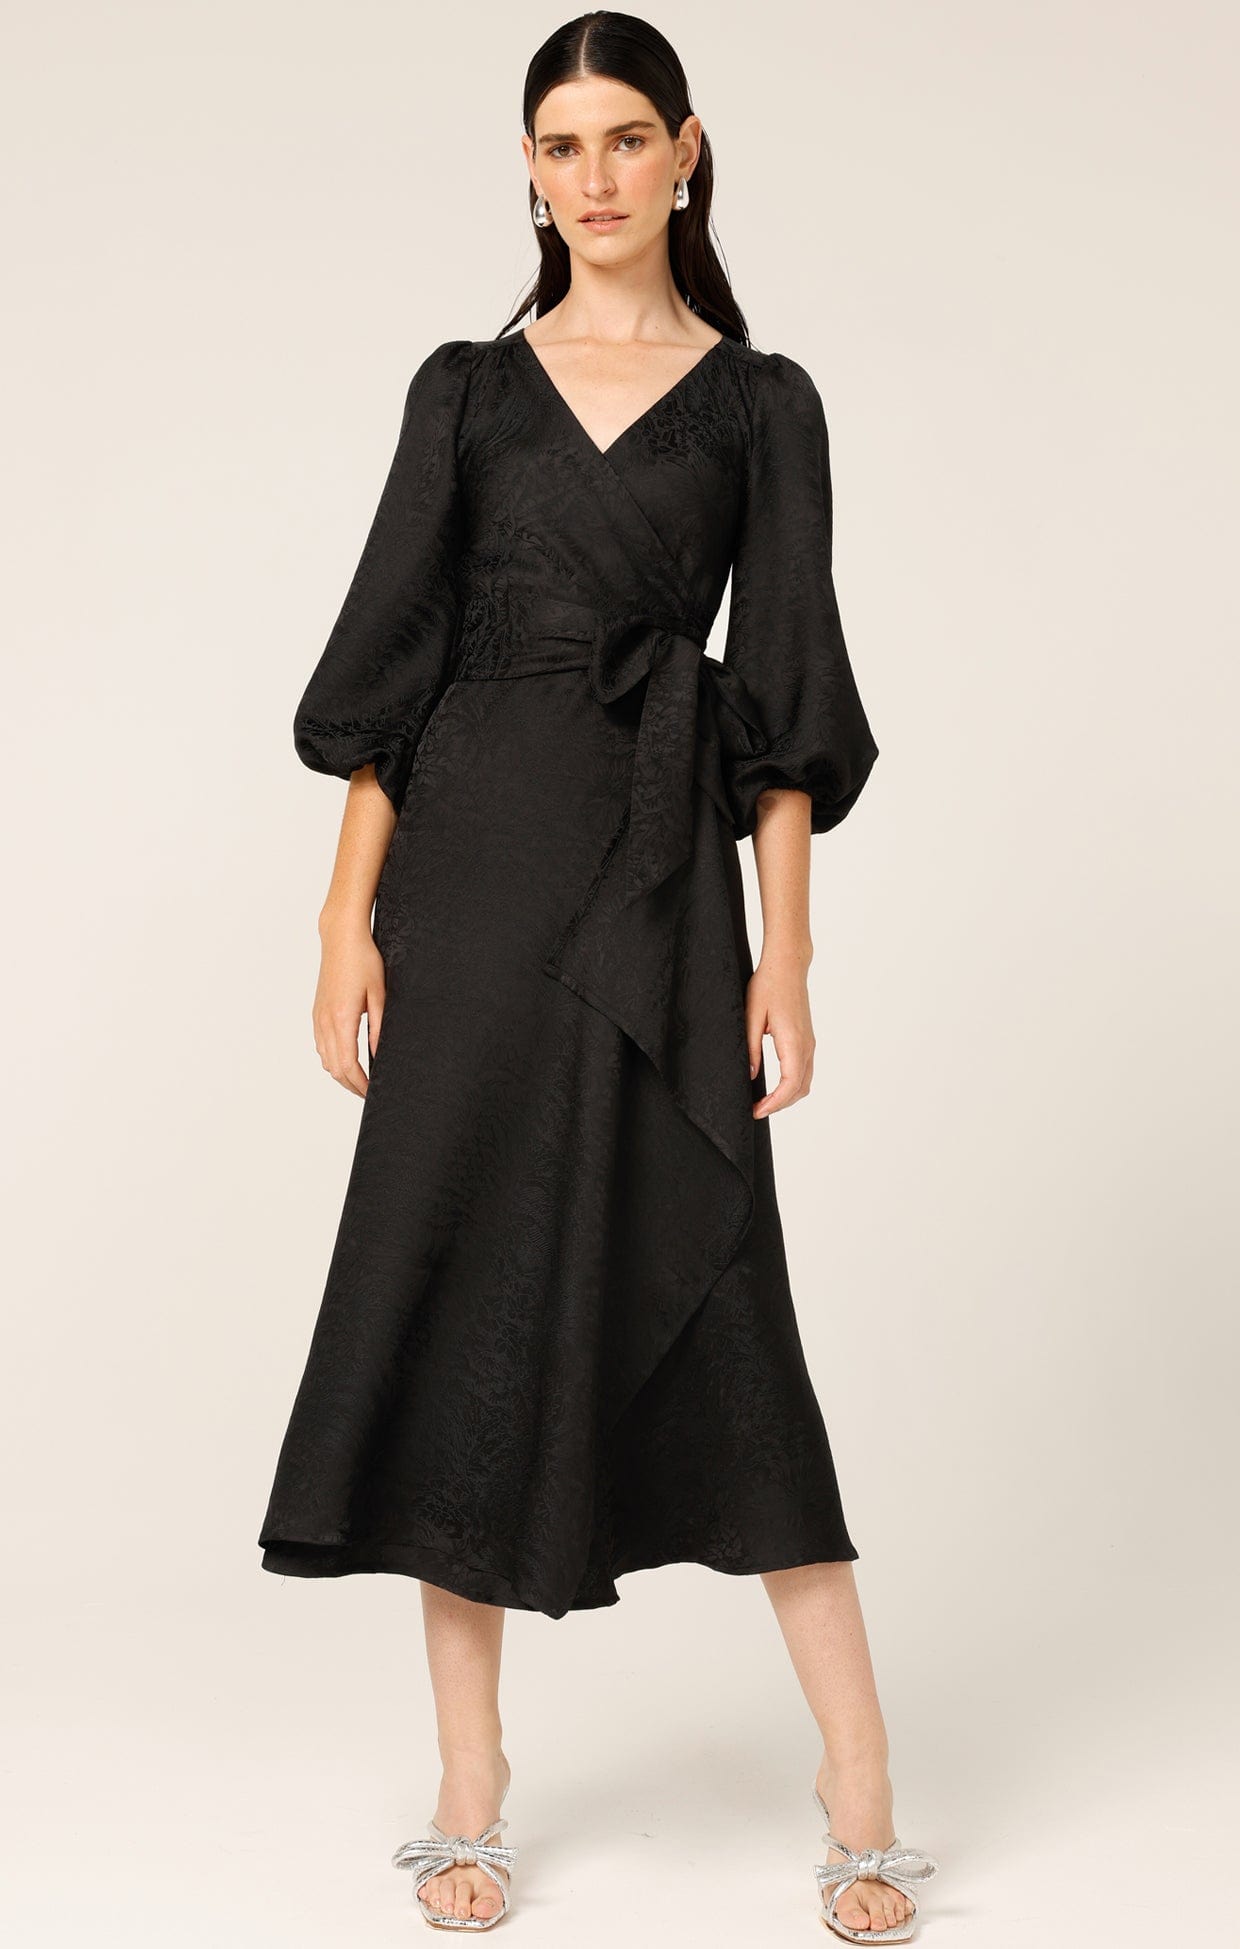 Dresses CHATEAU WRAP DRESS IN BLACK